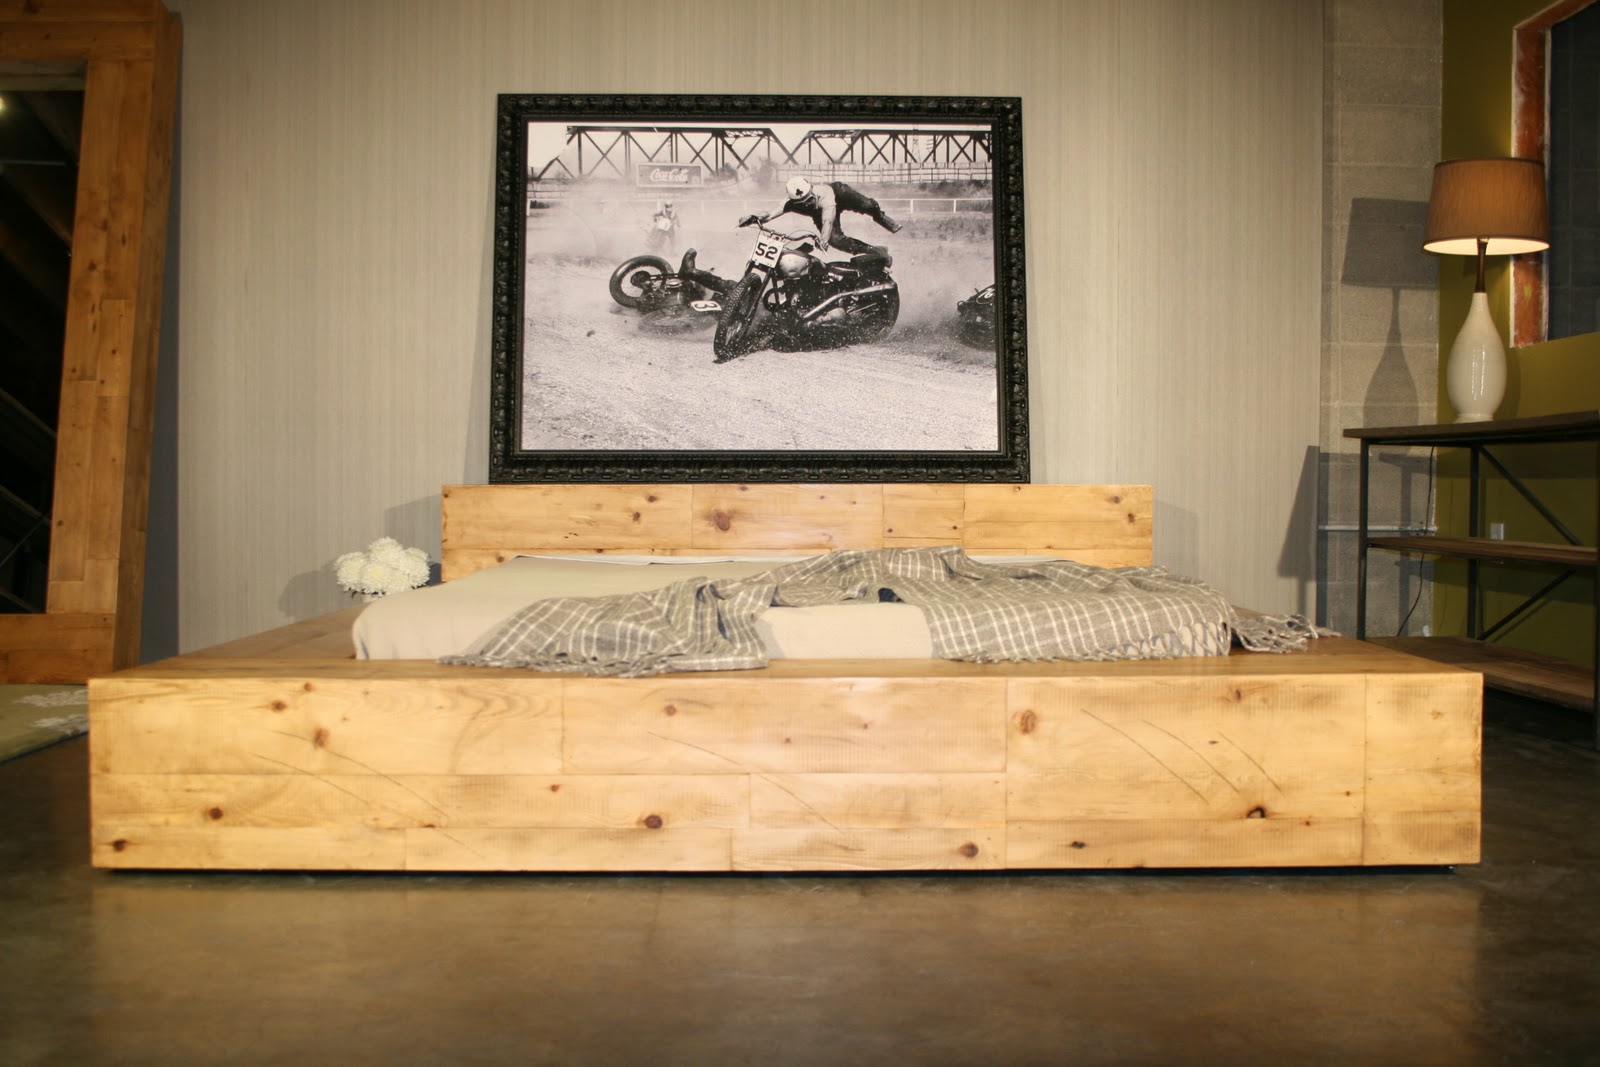 Reclaimed Wood Bed Frame